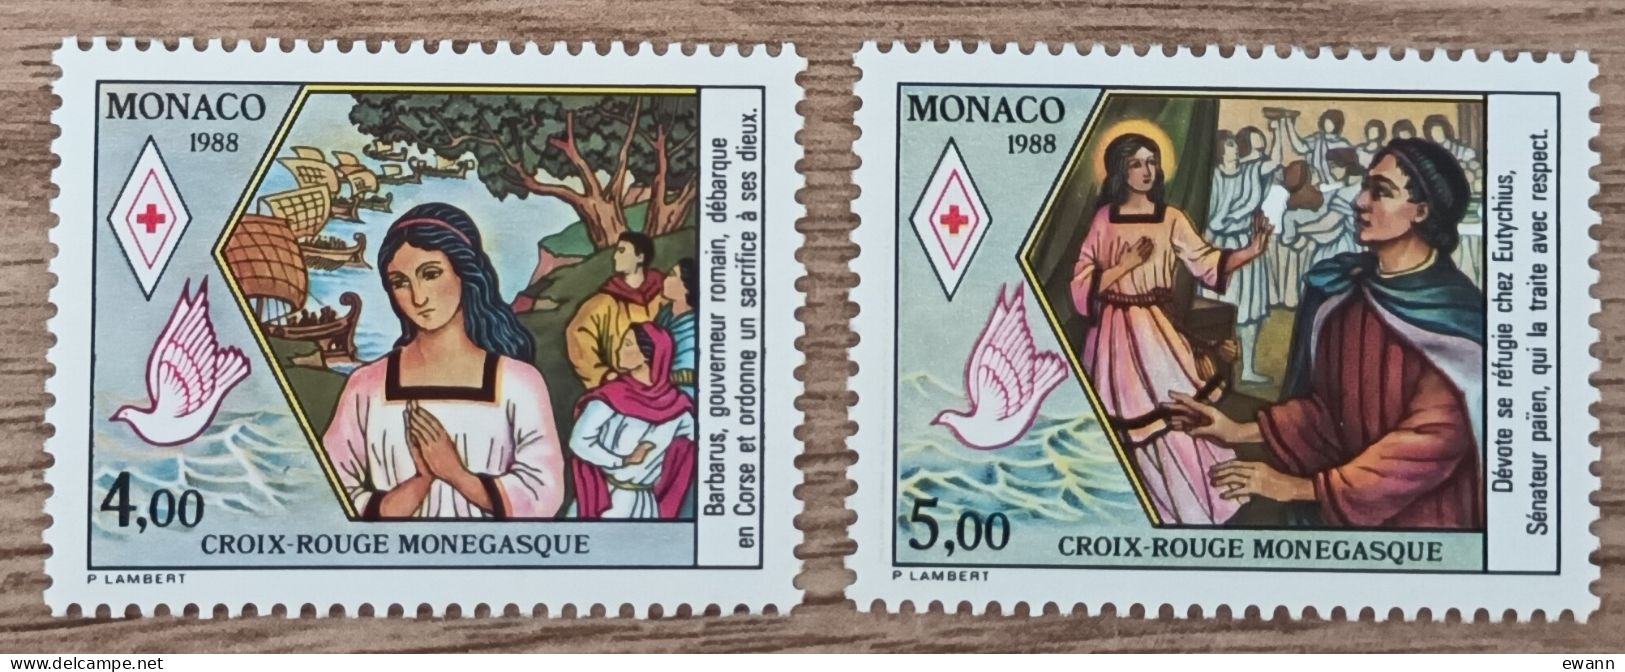 Monaco - YT N°1649, 1650 - Croix Rouge Monégasque - 1988 - Neuf - Ungebraucht